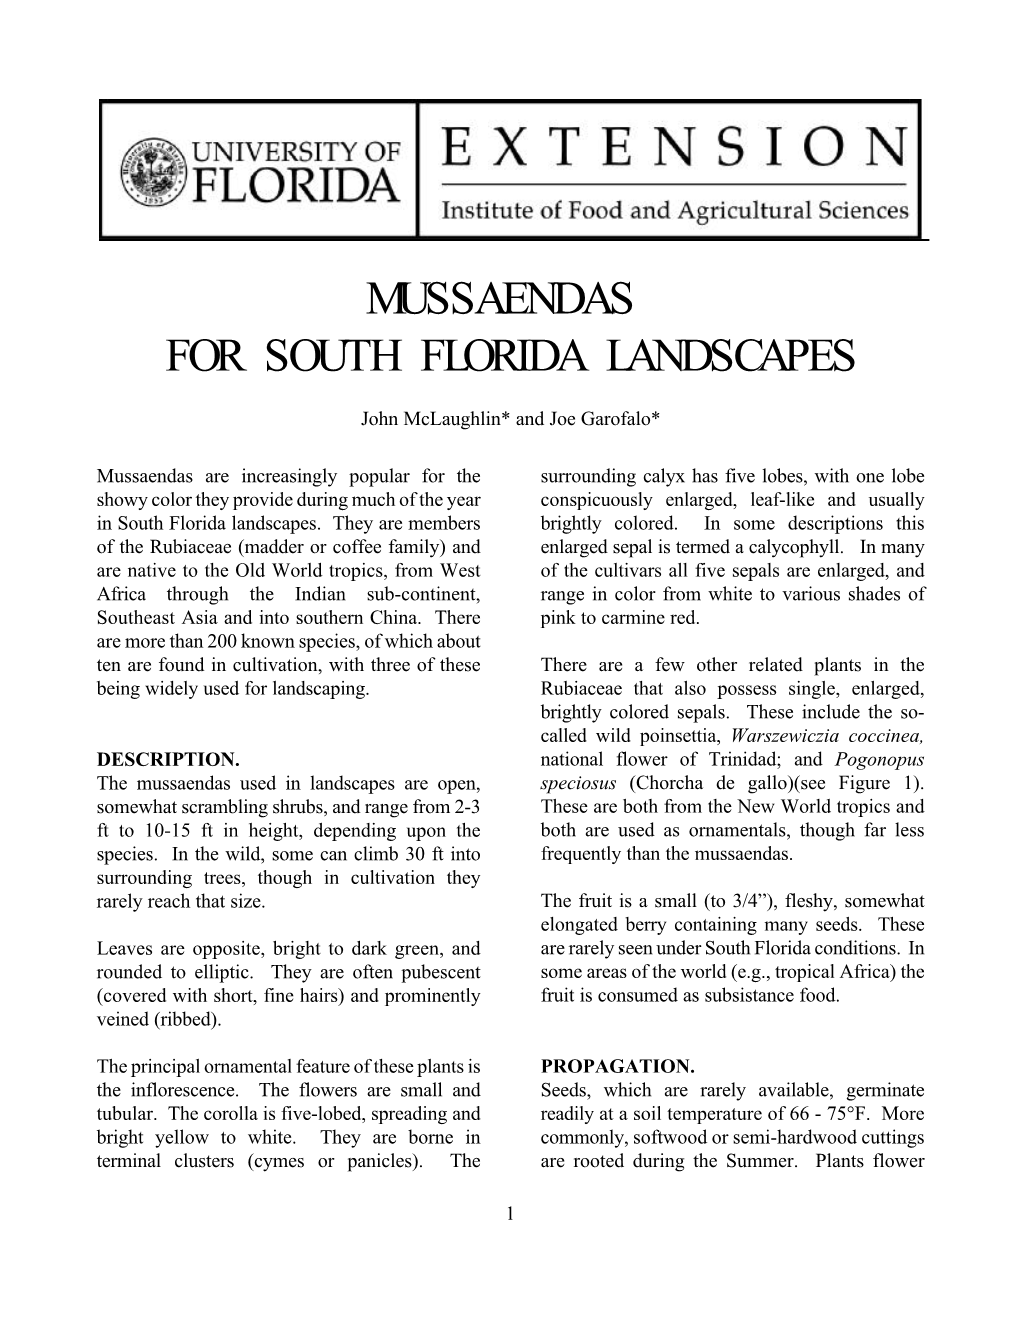 Mussaendas for South Florida Landscapes